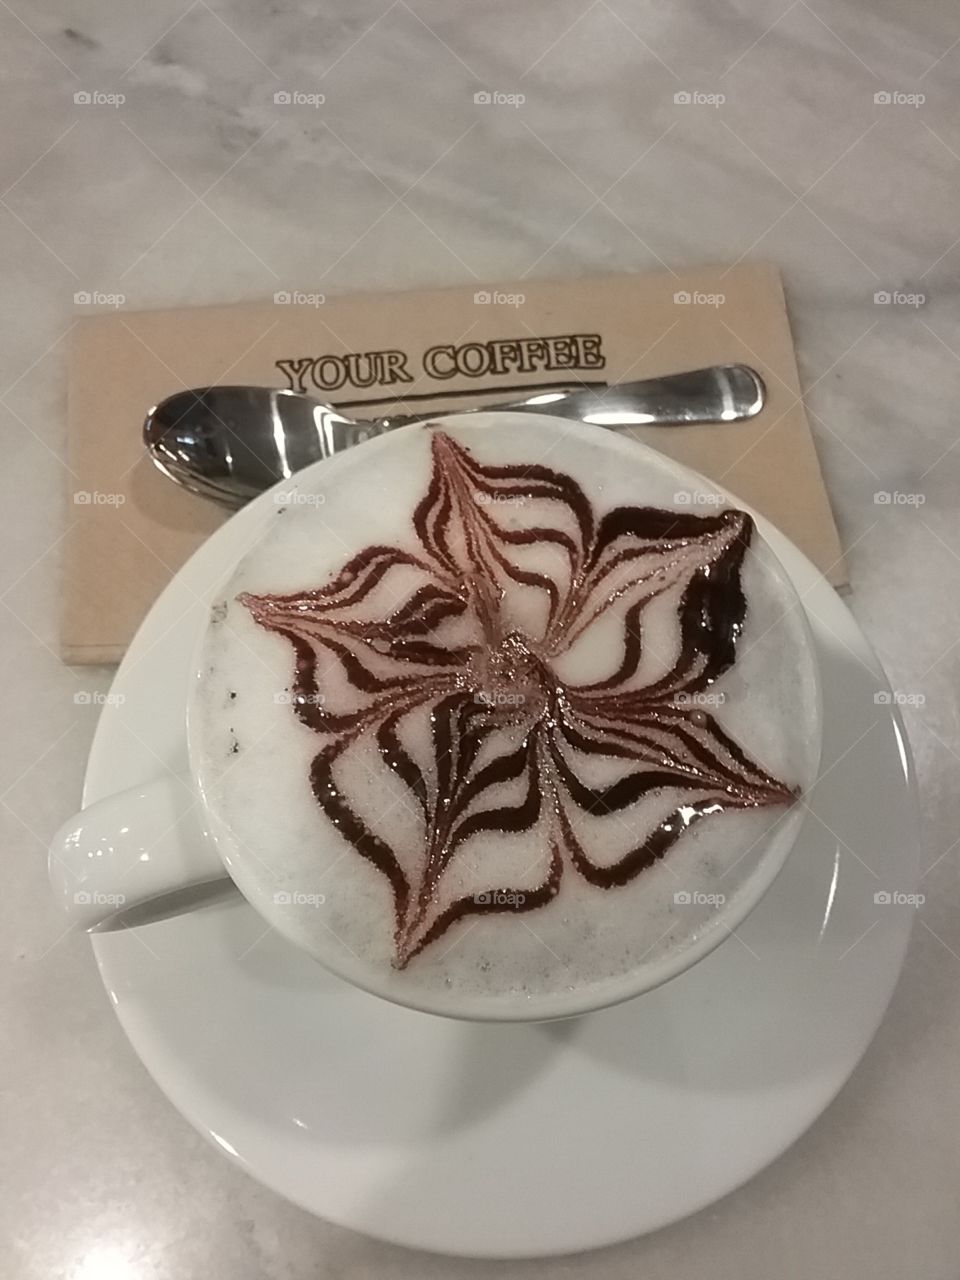 Your coffee & My hot chocolate.